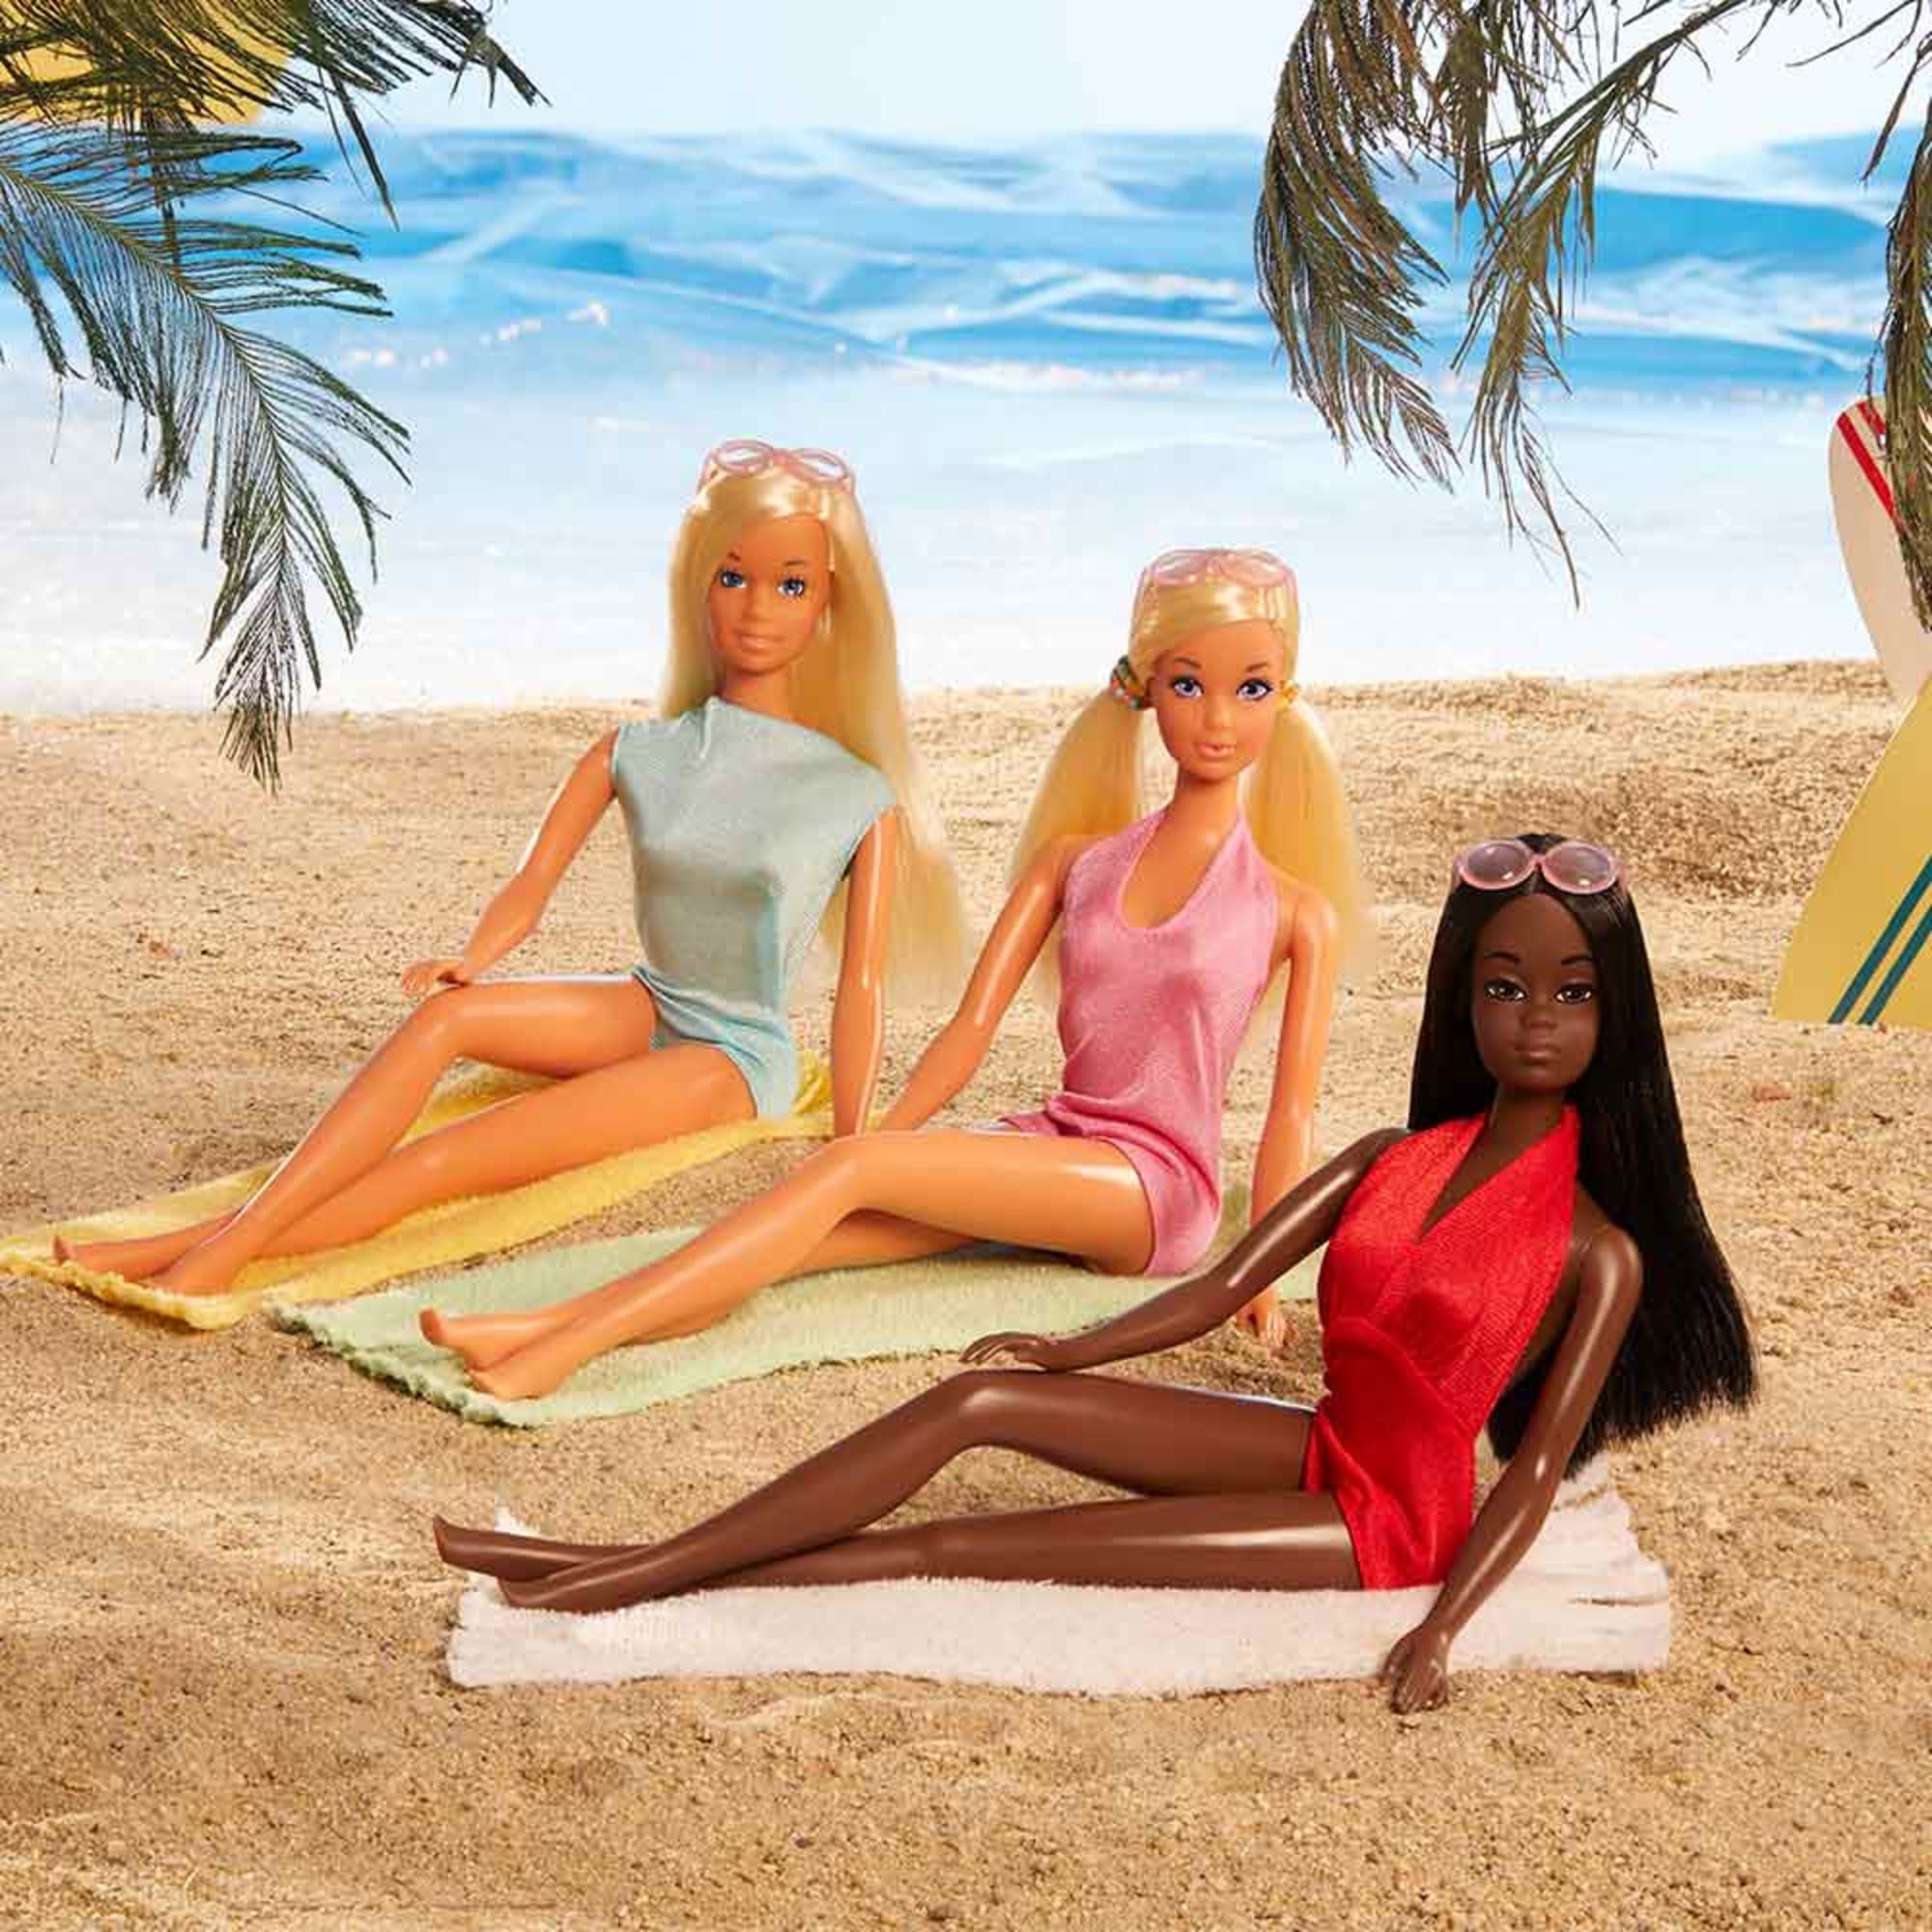 Barbie the Movie - Barbie Surfer Set